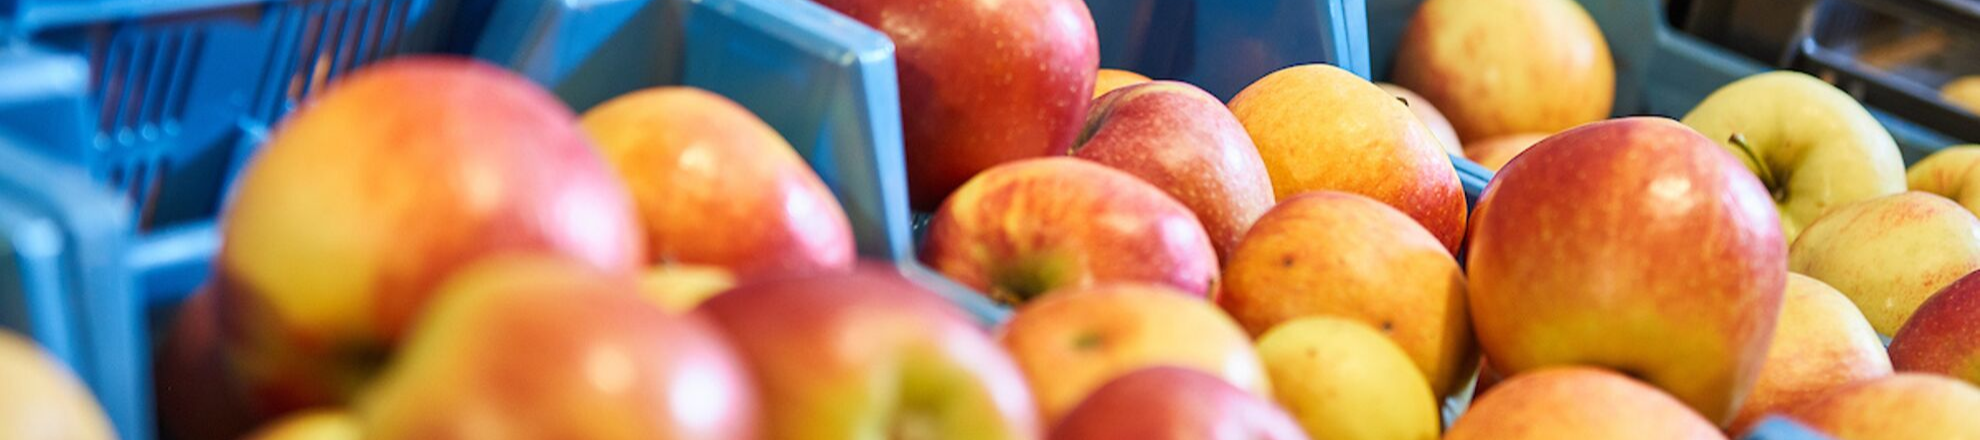 Appels studie food voeding gezond Aeres Hogeschool Almere